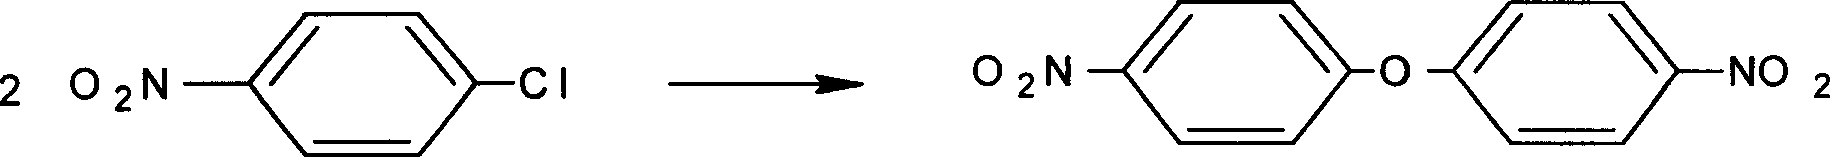 Preparing process of 4,4-dinitro diphenyl ether